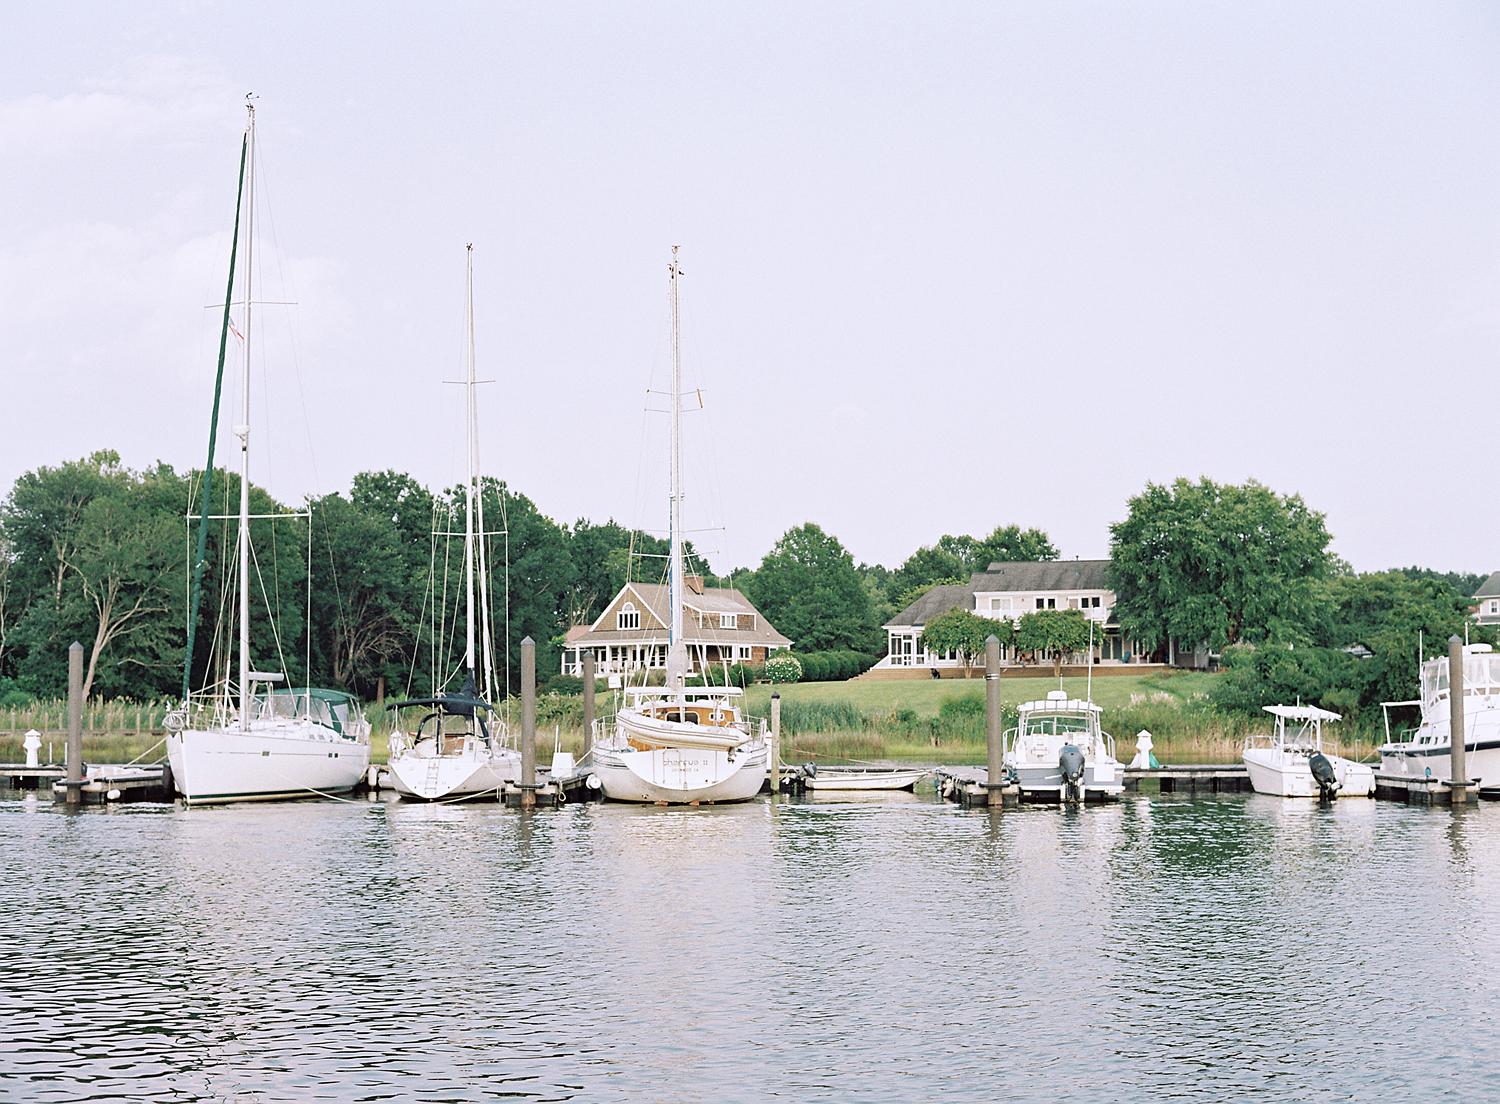 Sailing on the Chesapeake bay